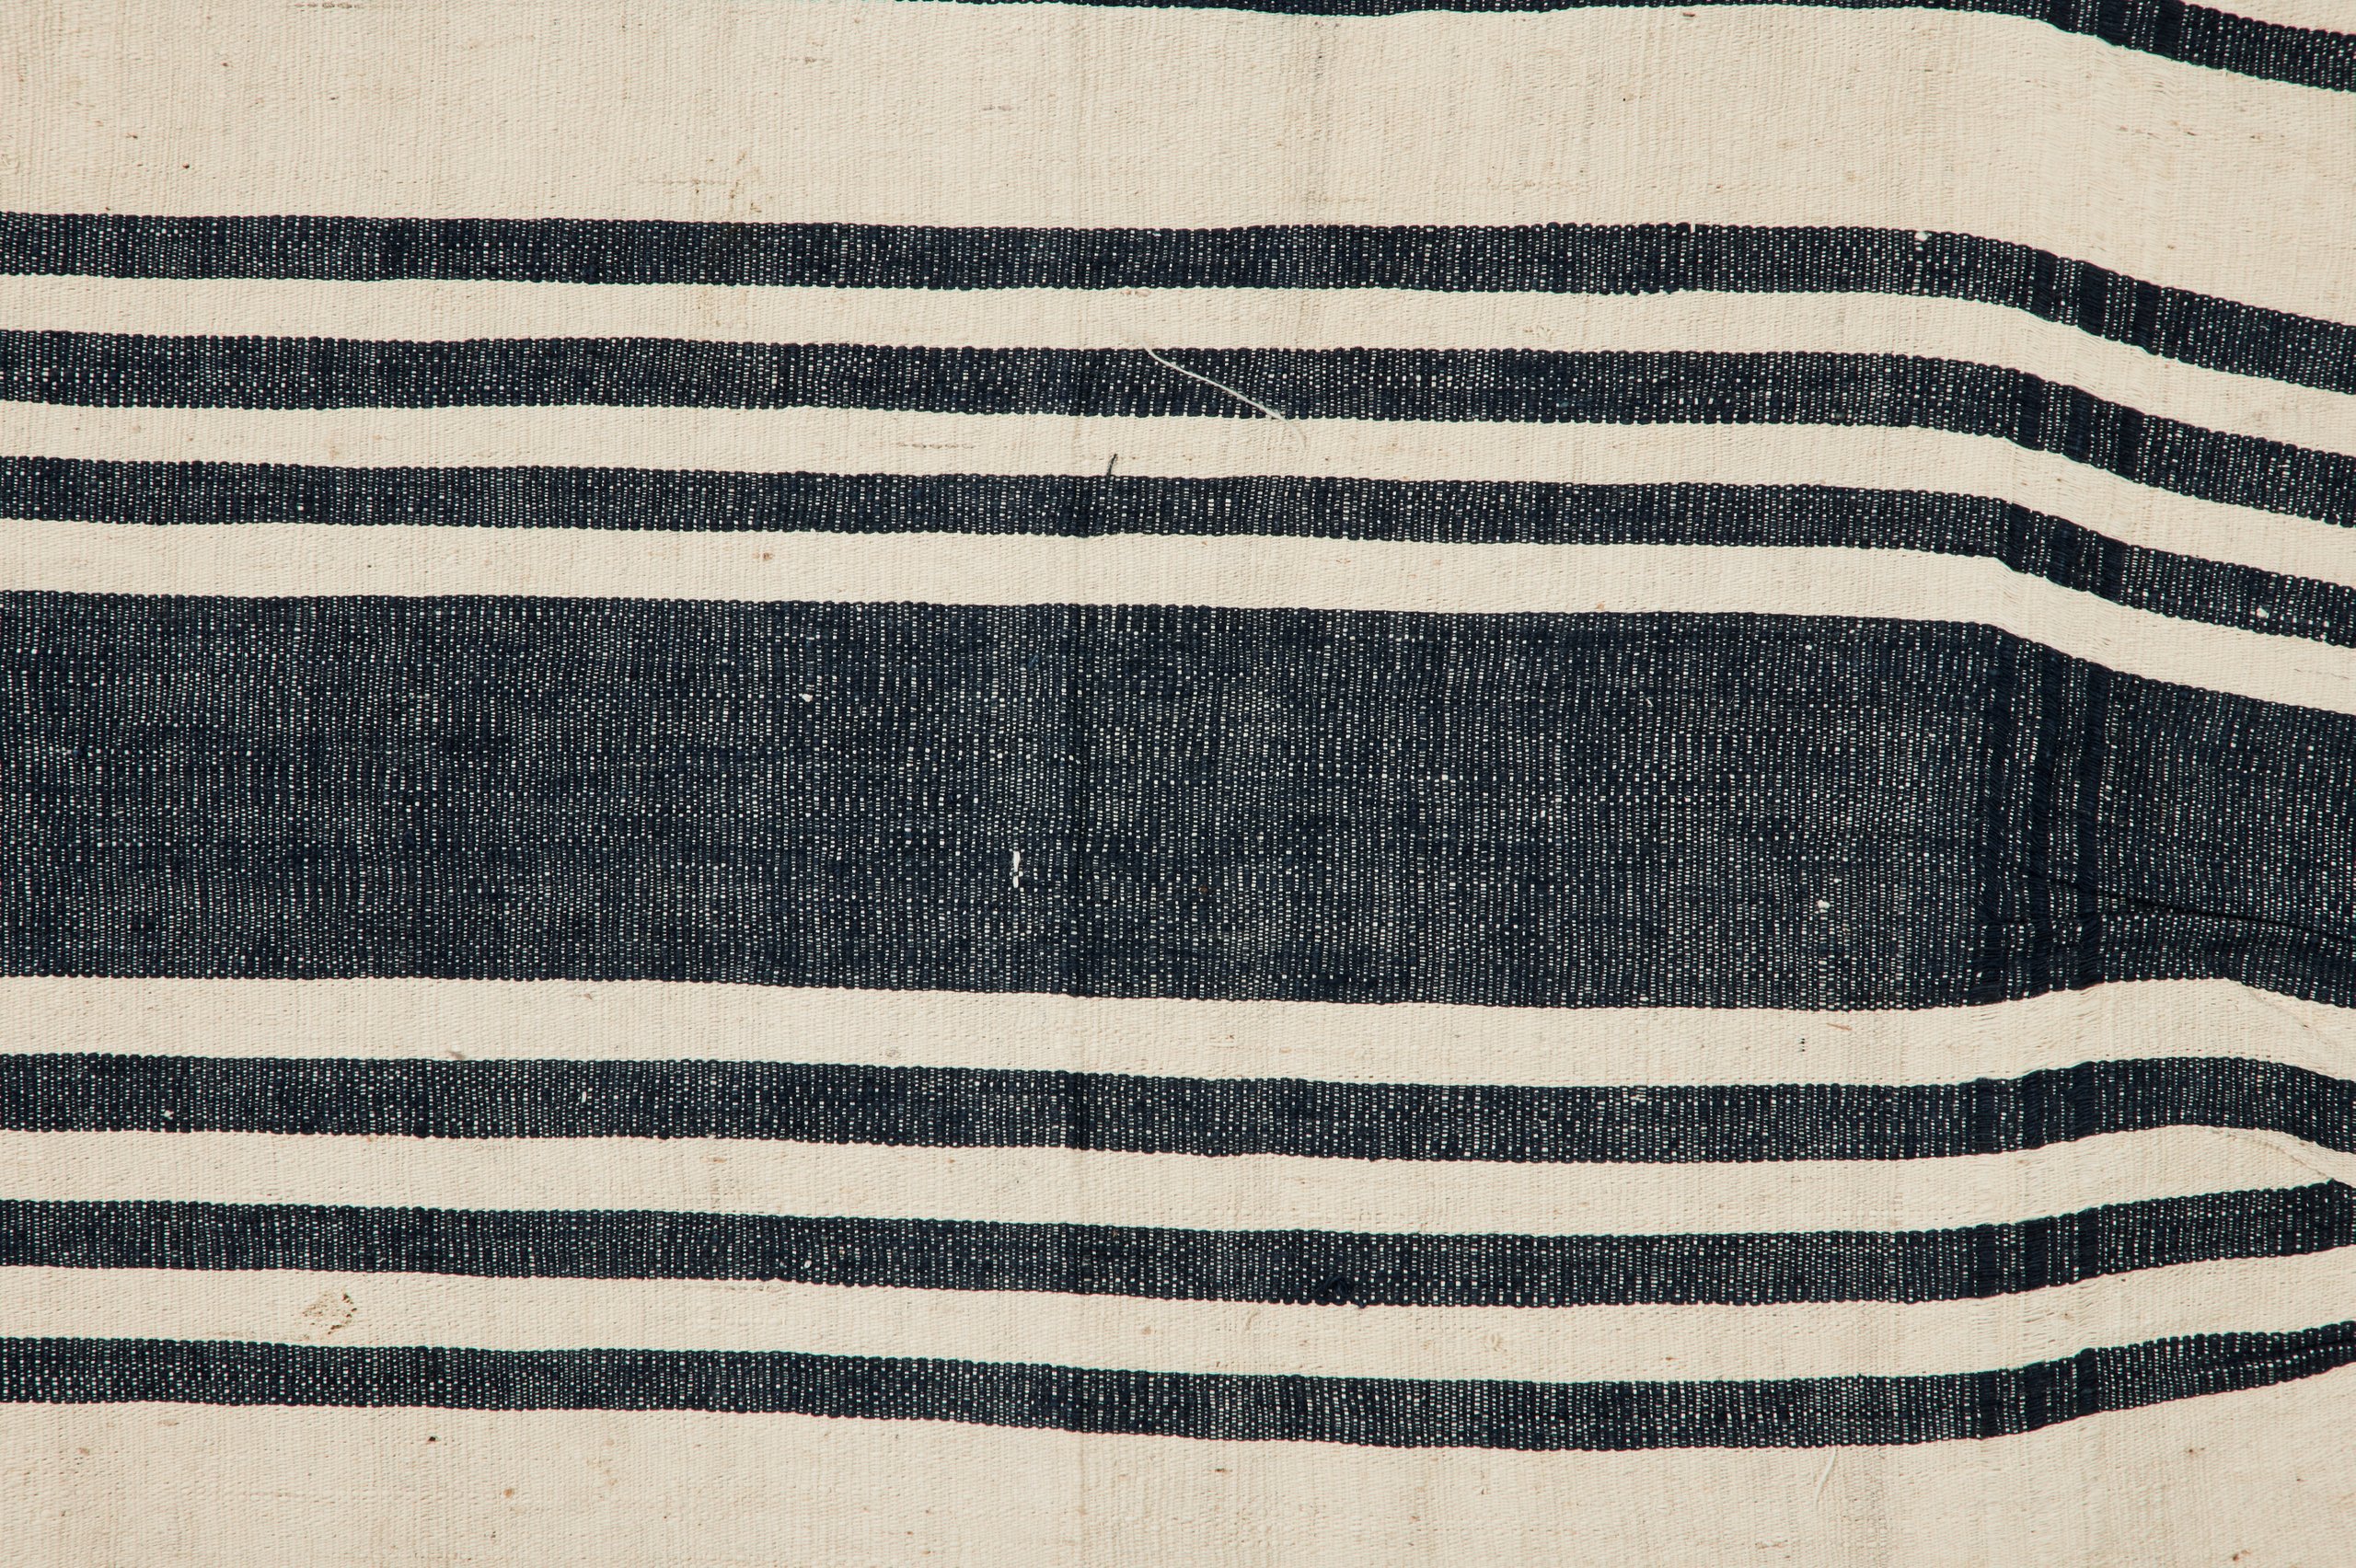 Kombong textile by the Sasak people